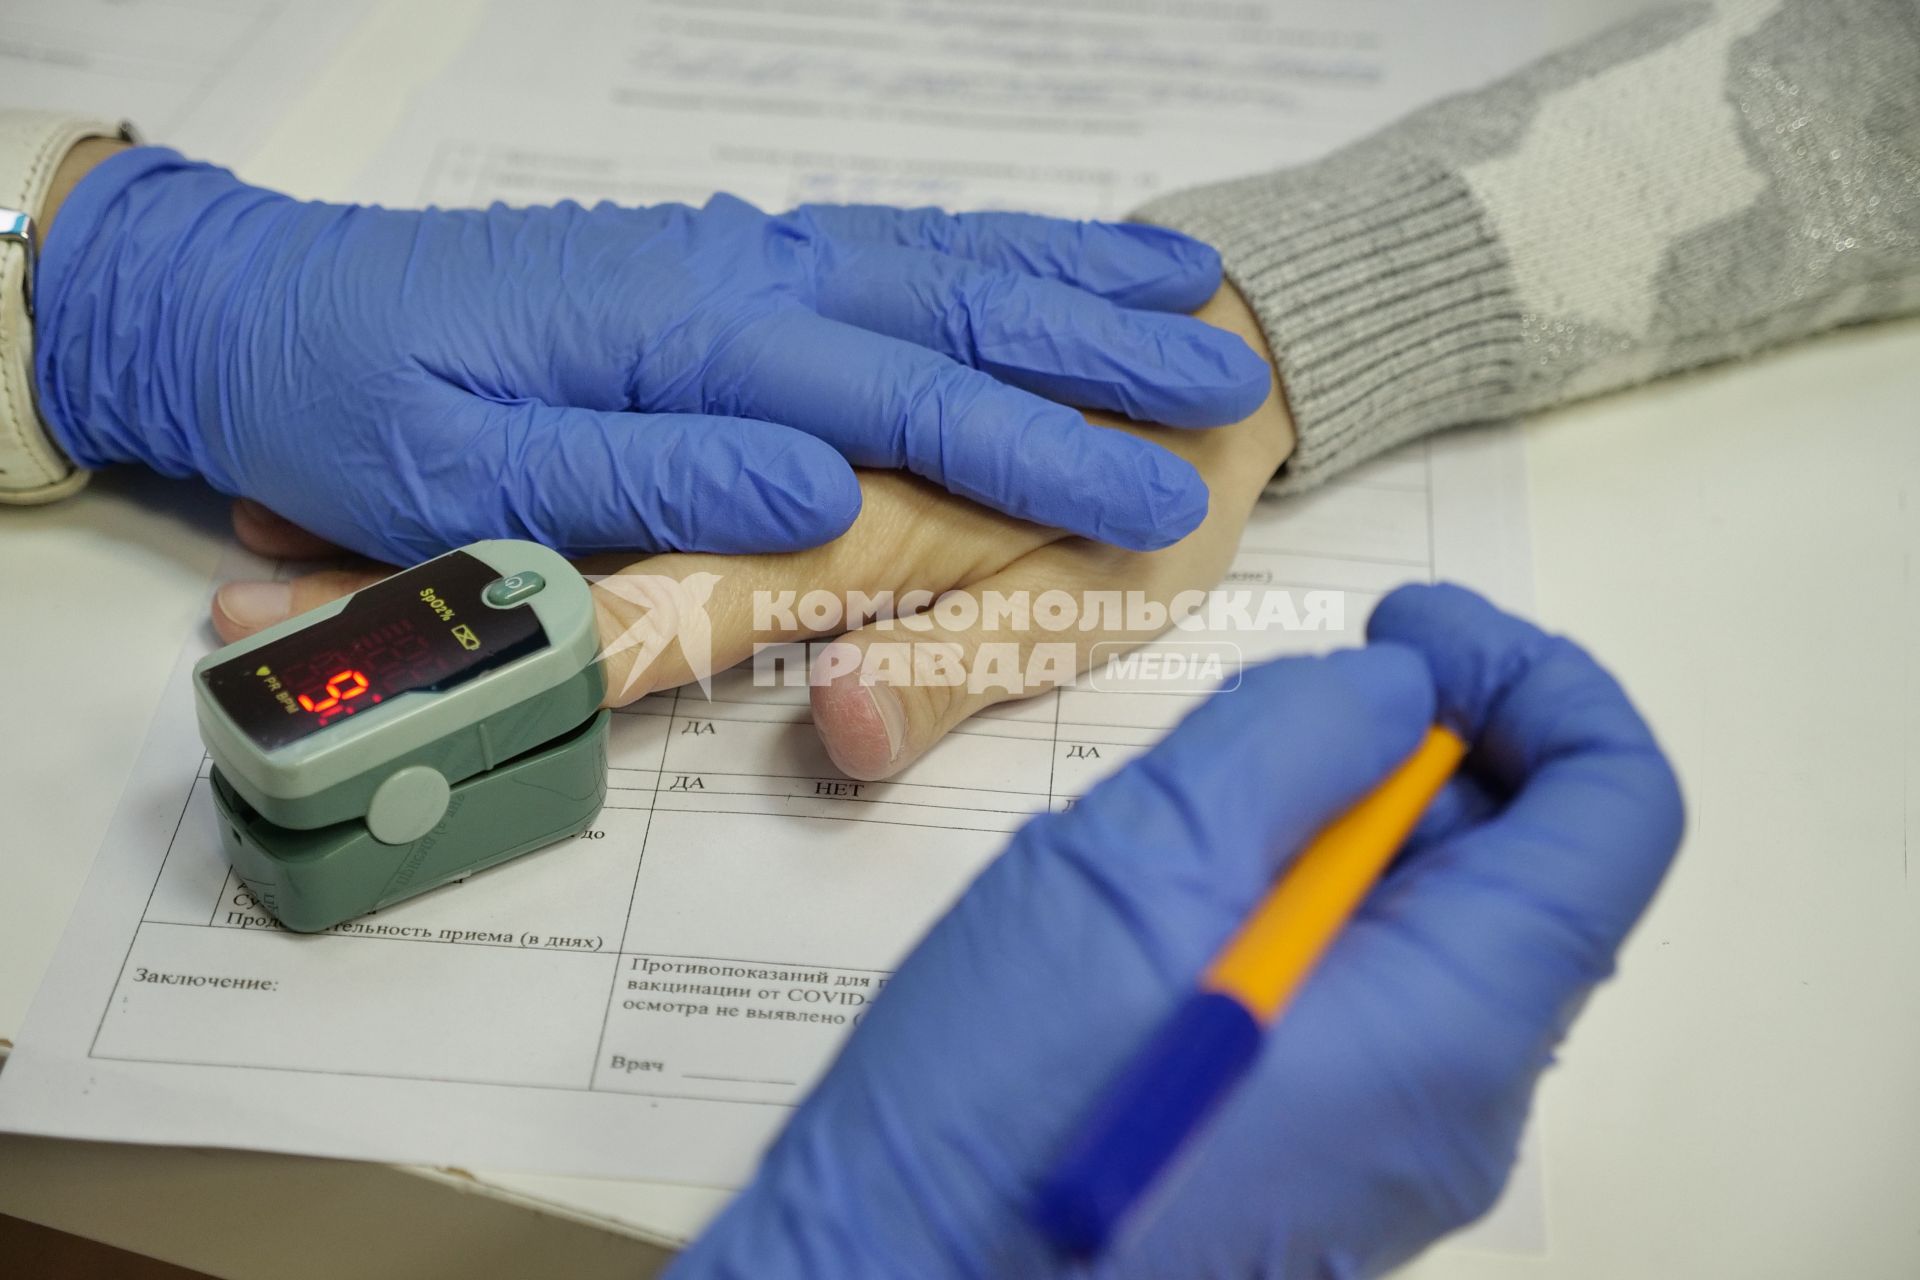 Самара. Врач измеряет пульсоксиметром кислород в крови пациента перед вакцинацией от COVID-19.